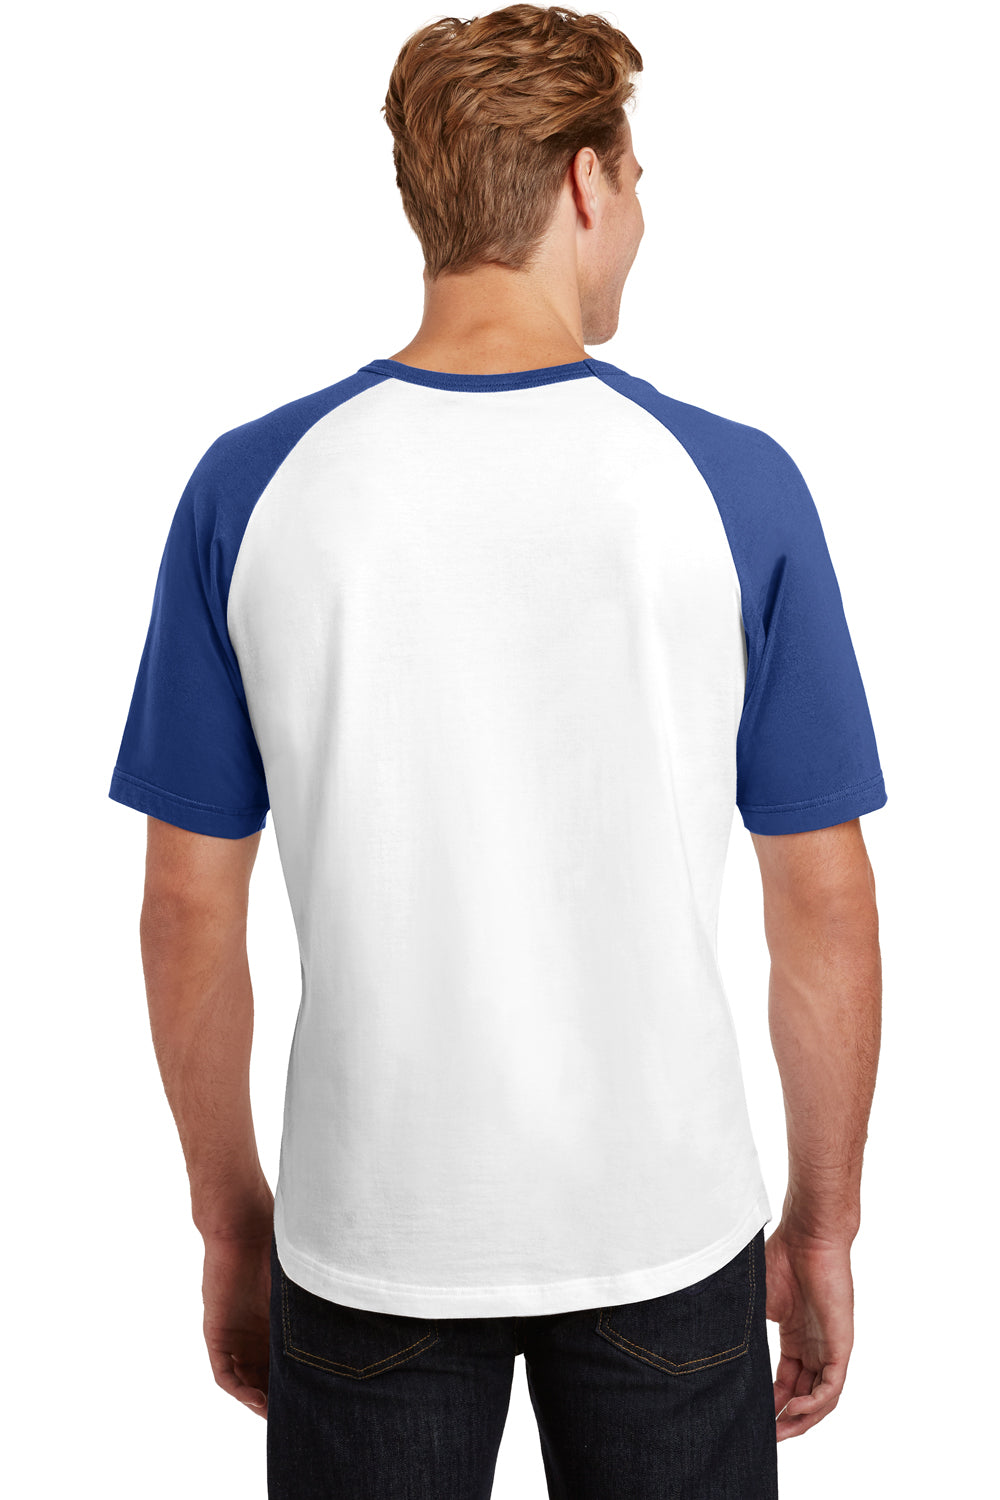 Sport-Tek T201 Mens Short Sleeve Crewneck T-Shirt White/Royal Blue Back